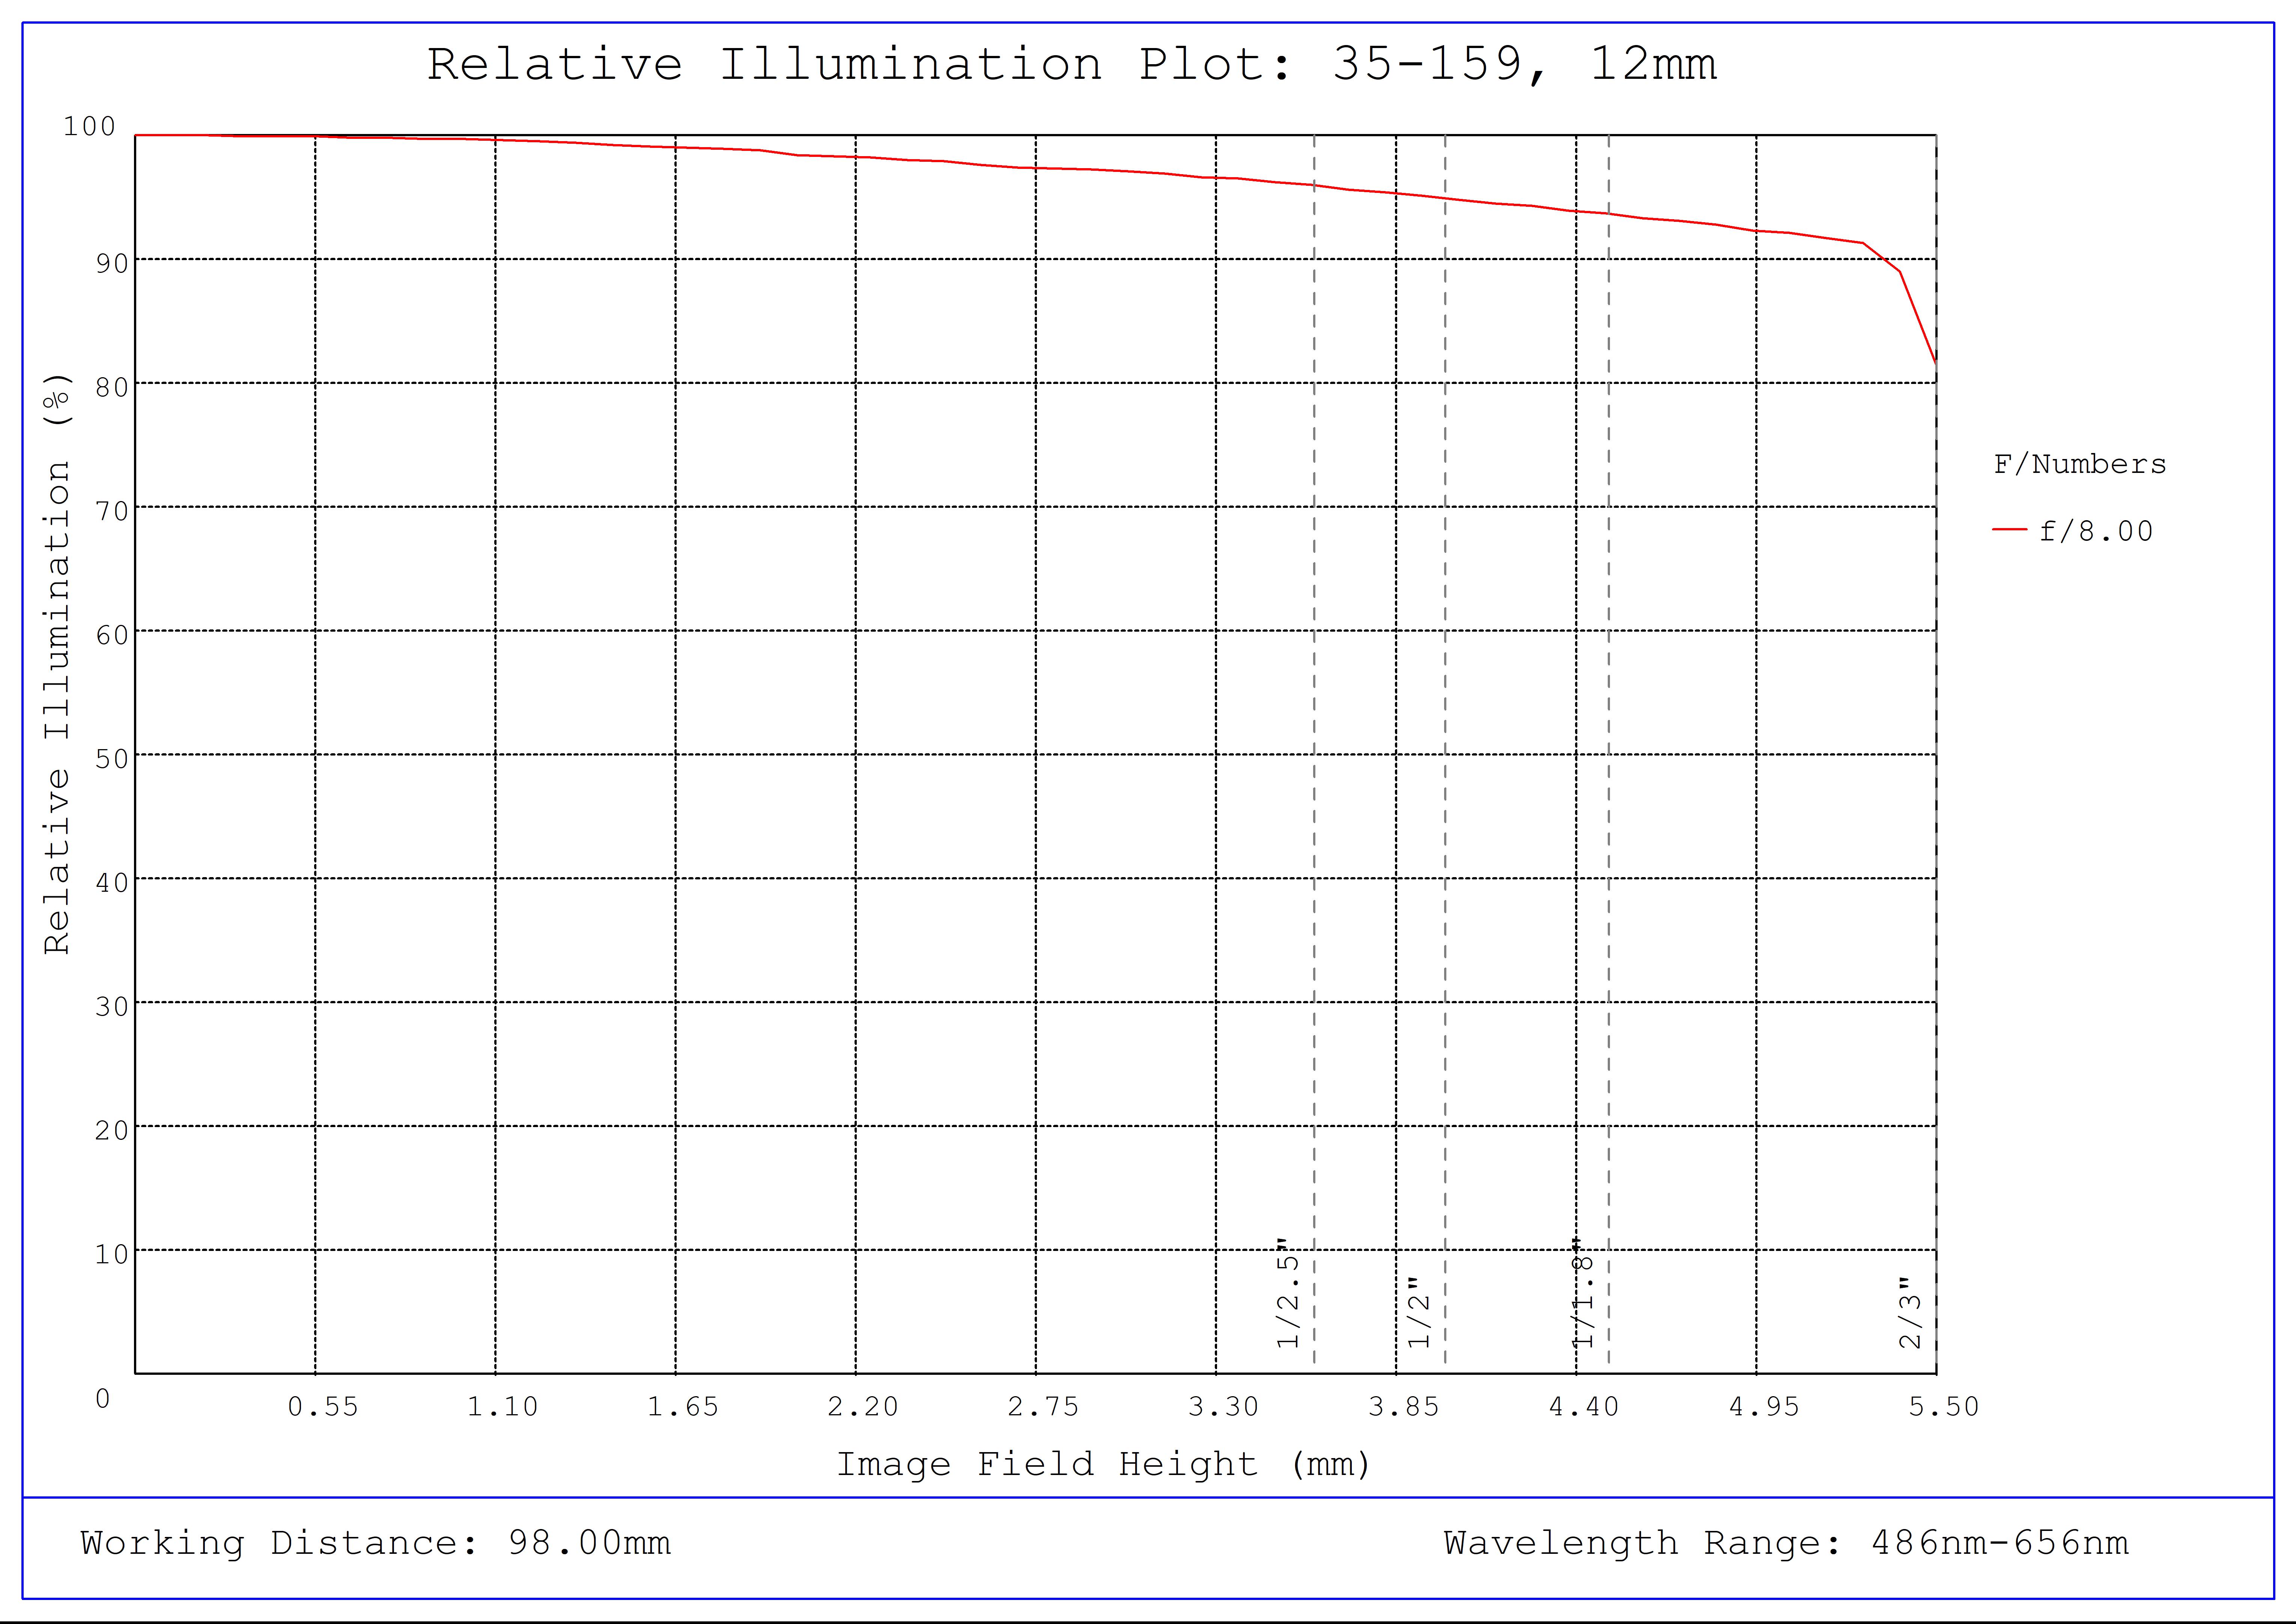 #35-159, 12mm, f/8 Cr Series Fixed Focal Length Lens, Relative Illumination Plot